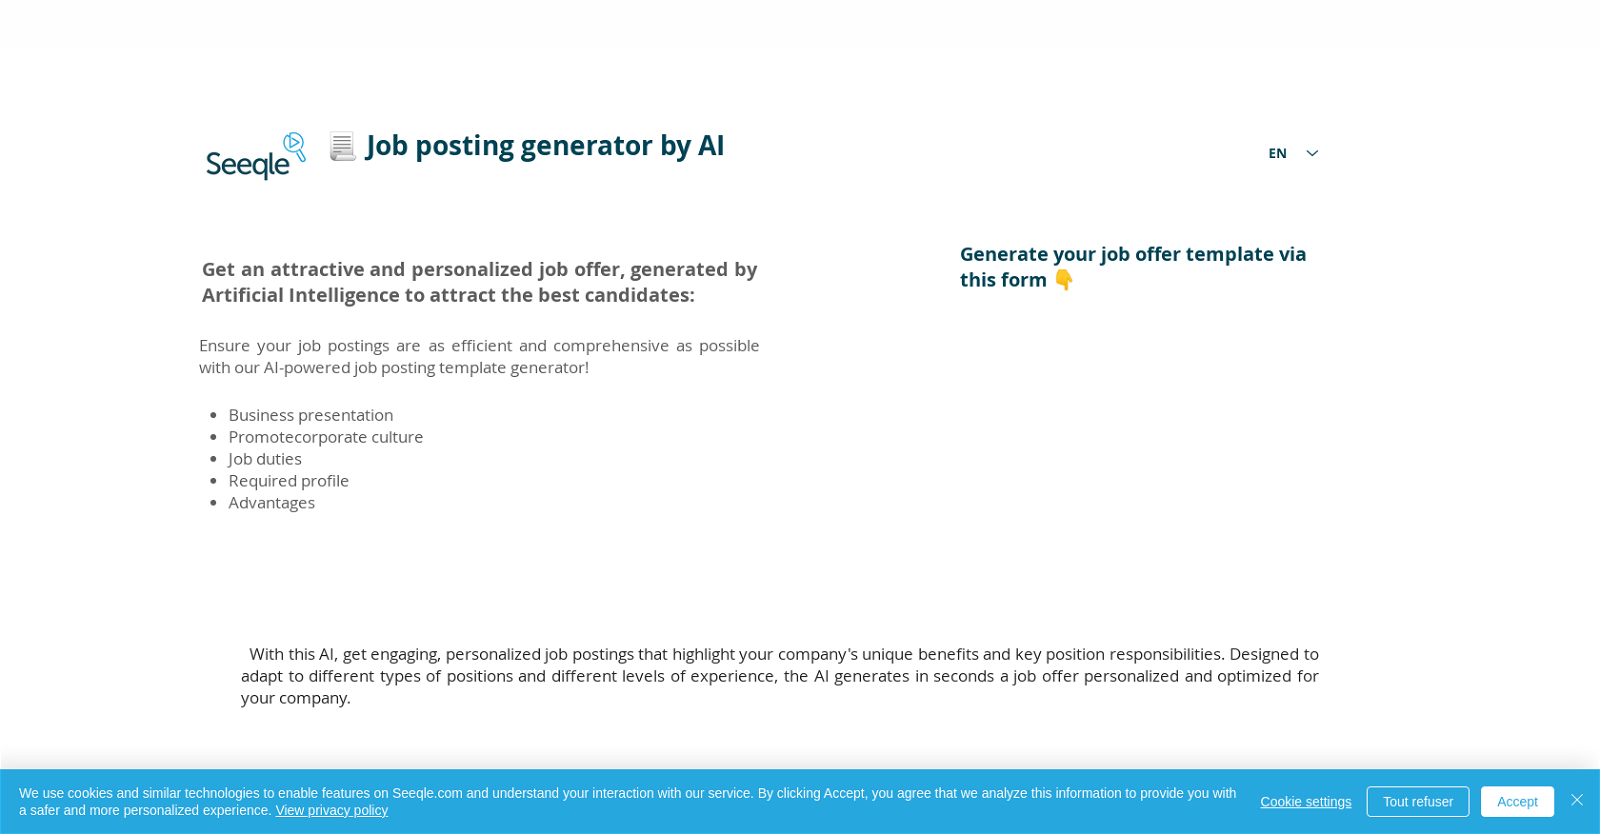 Job posting generator by AI website